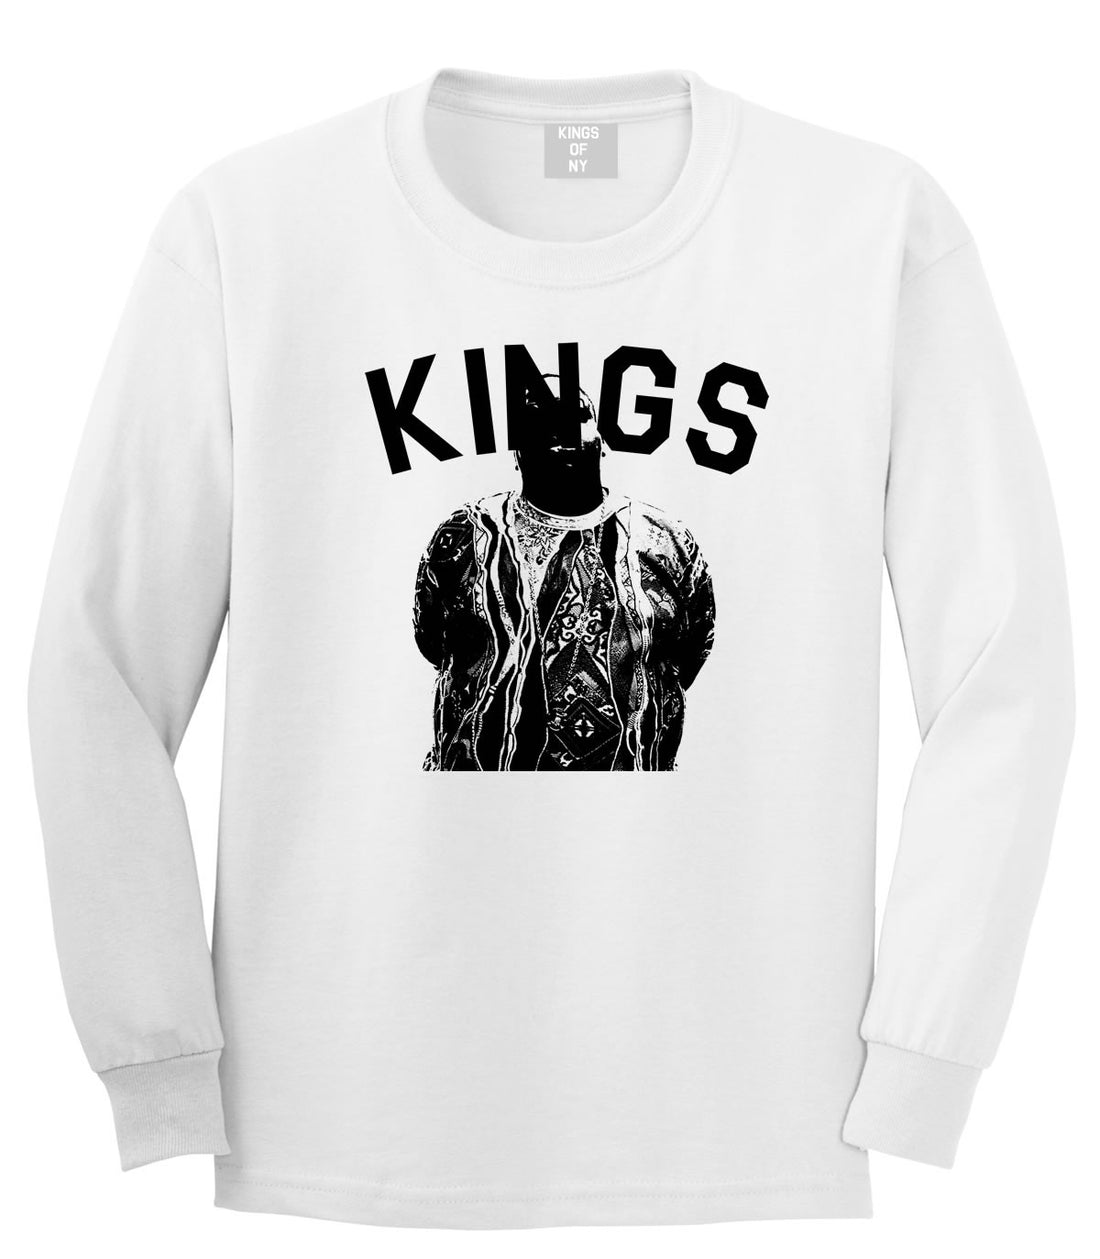 Kings Biggie Smalls Long Sleeve T-Shirt By Kings Of NY